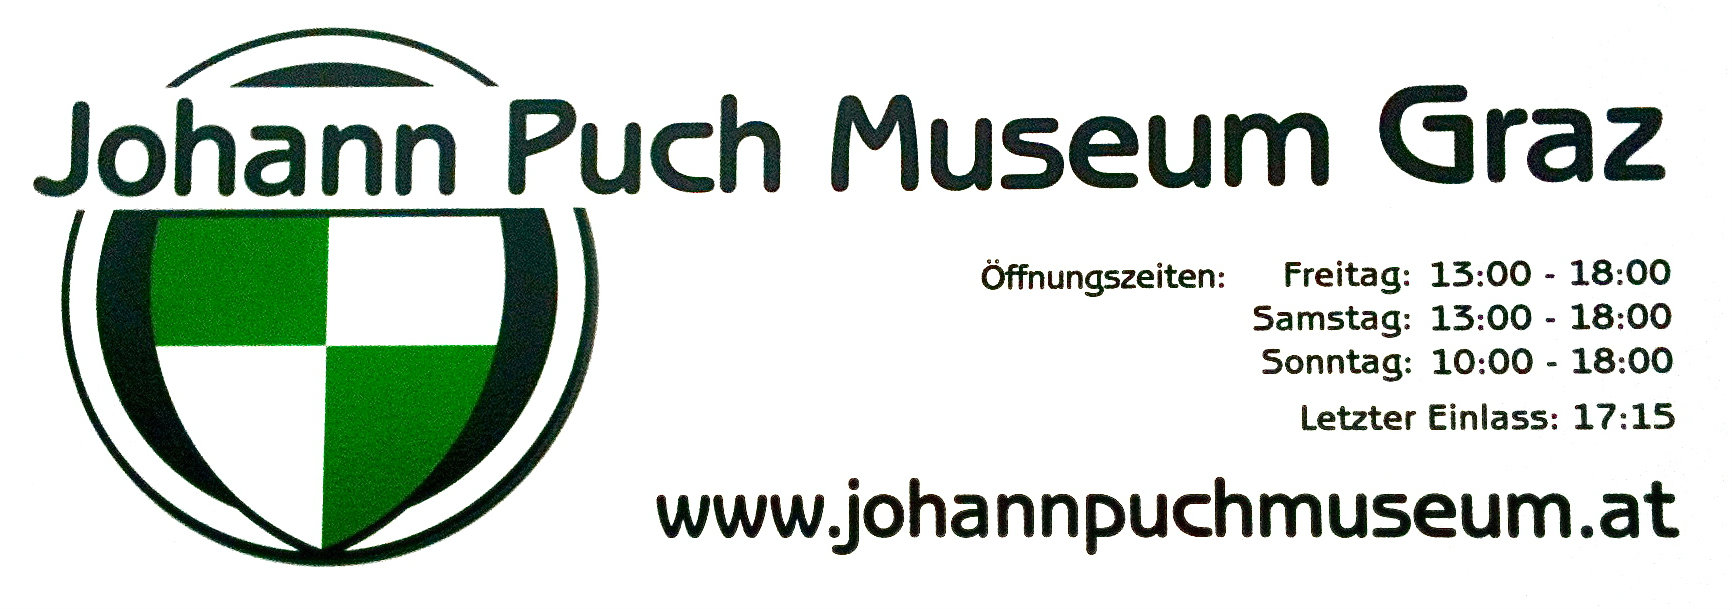 johanpuchmuseum.jpg